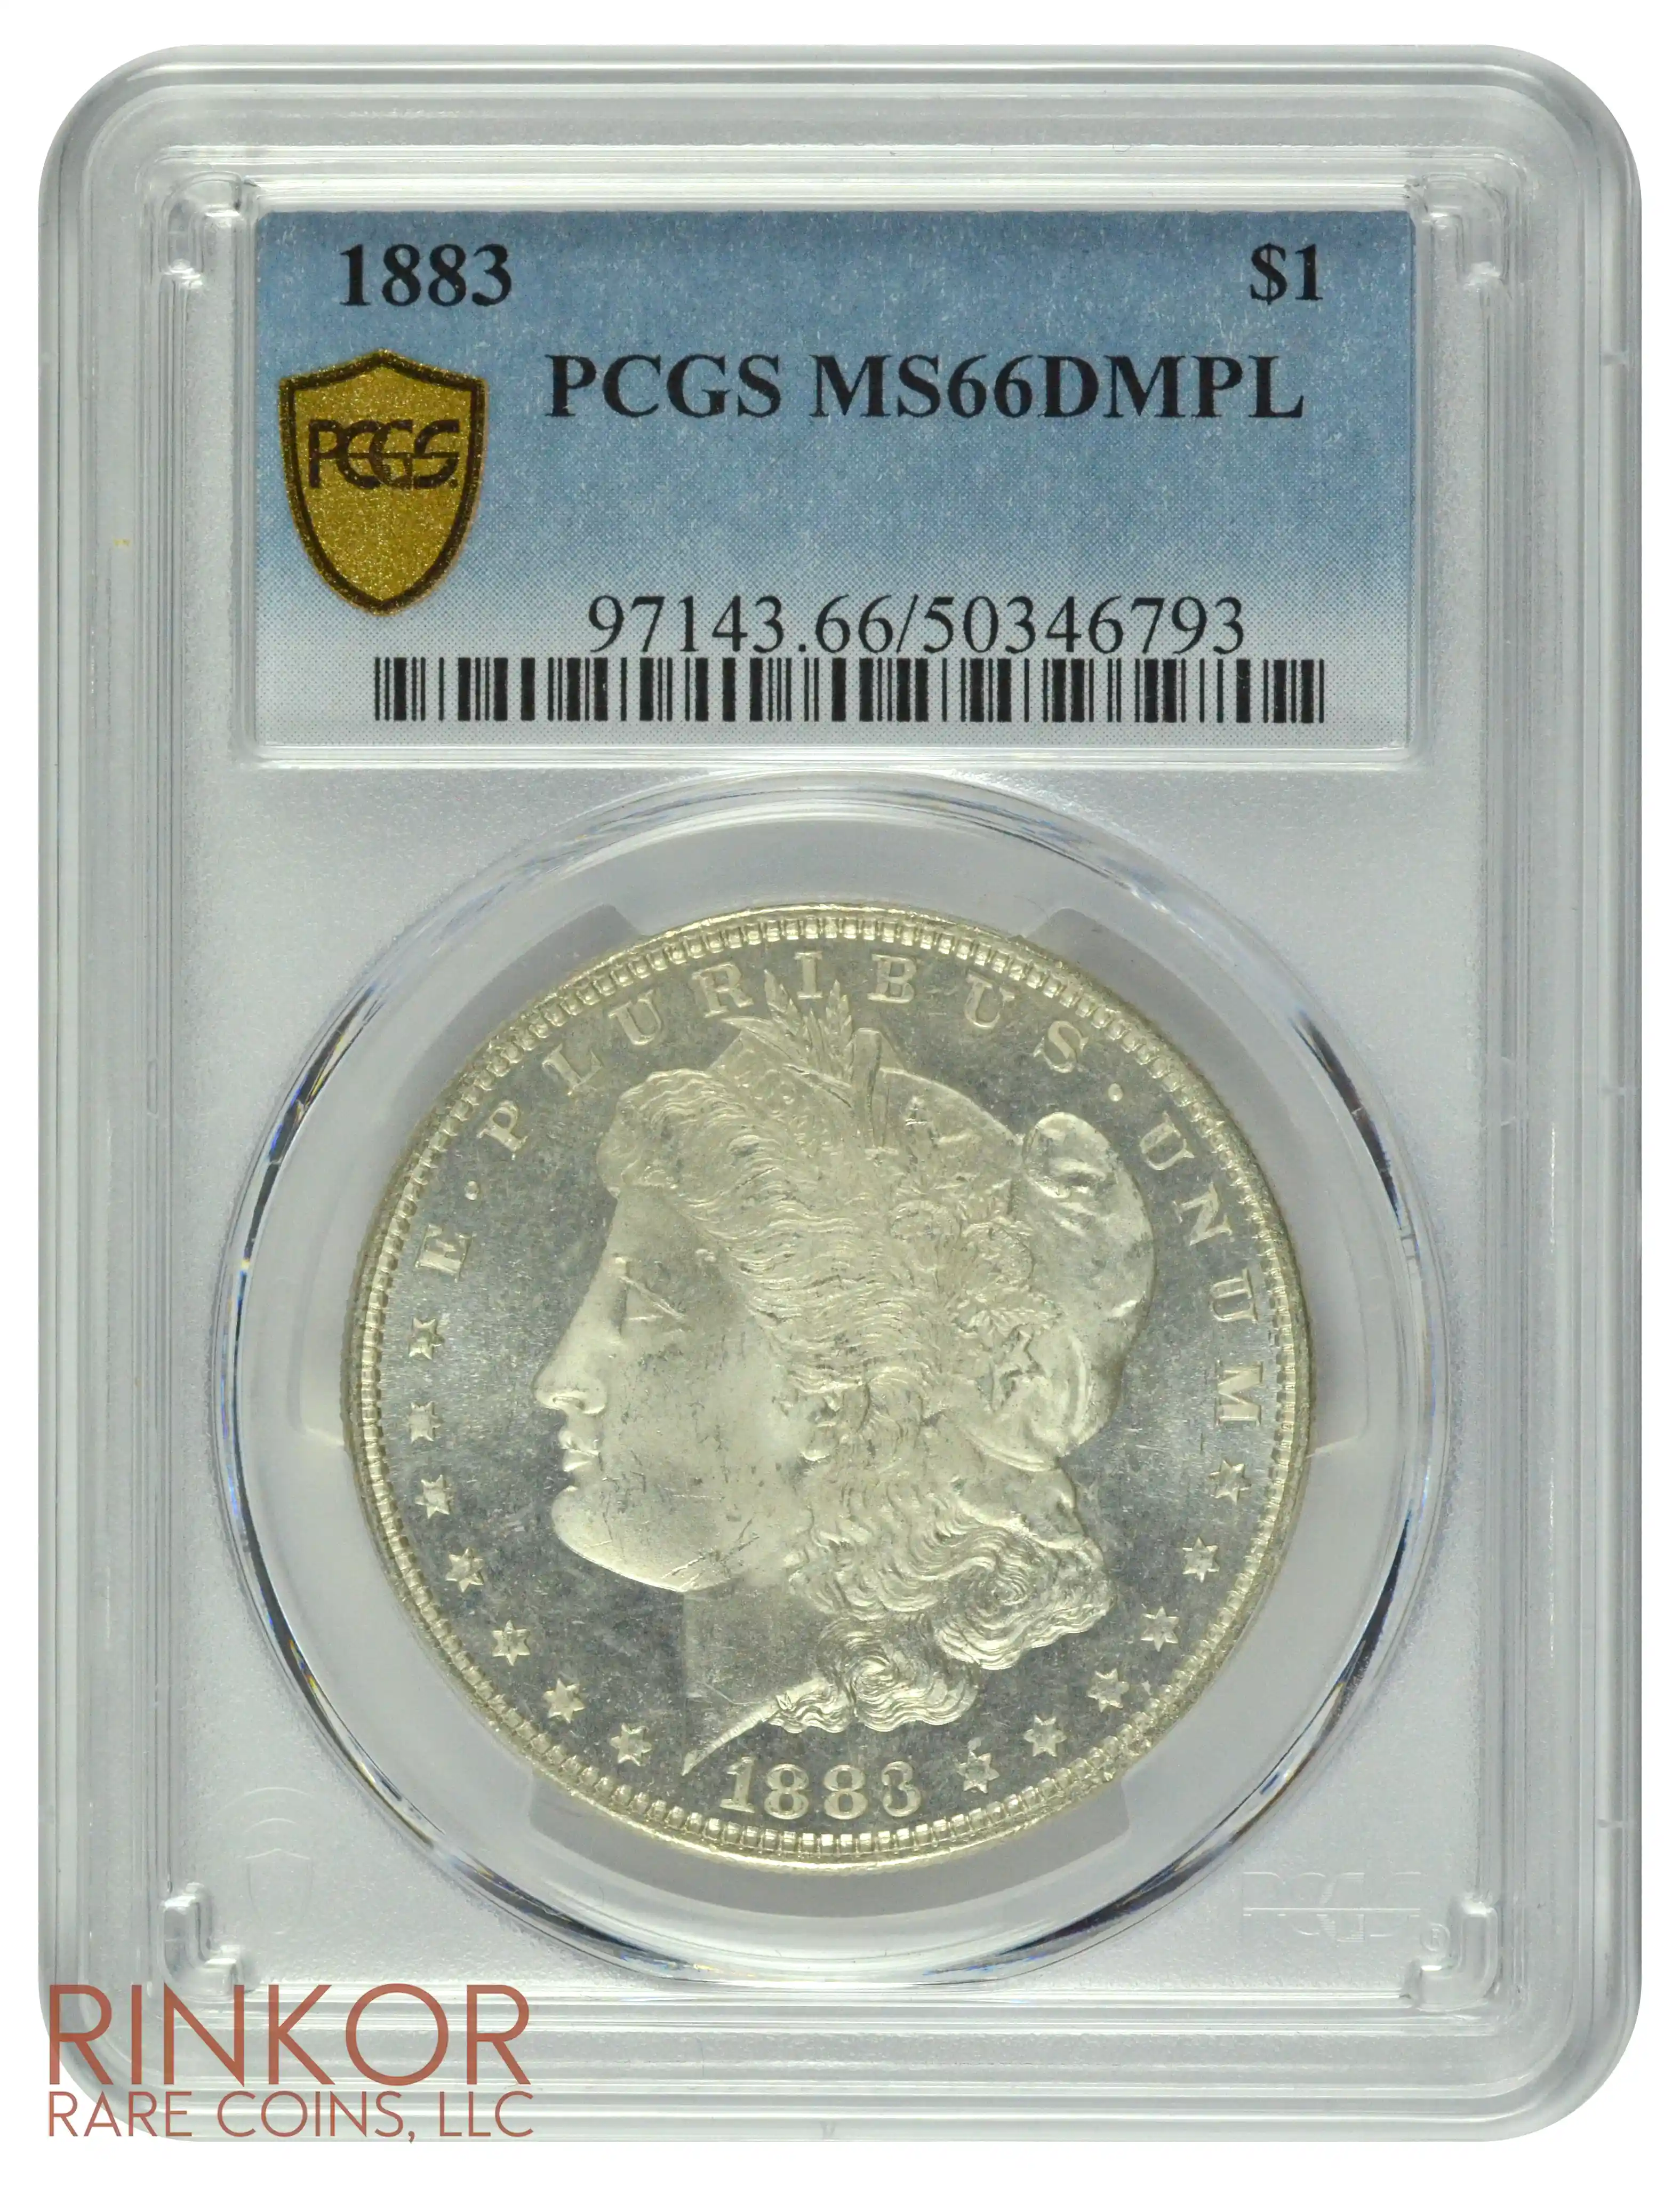 1883 $1 PCGS MS 66 DMPL